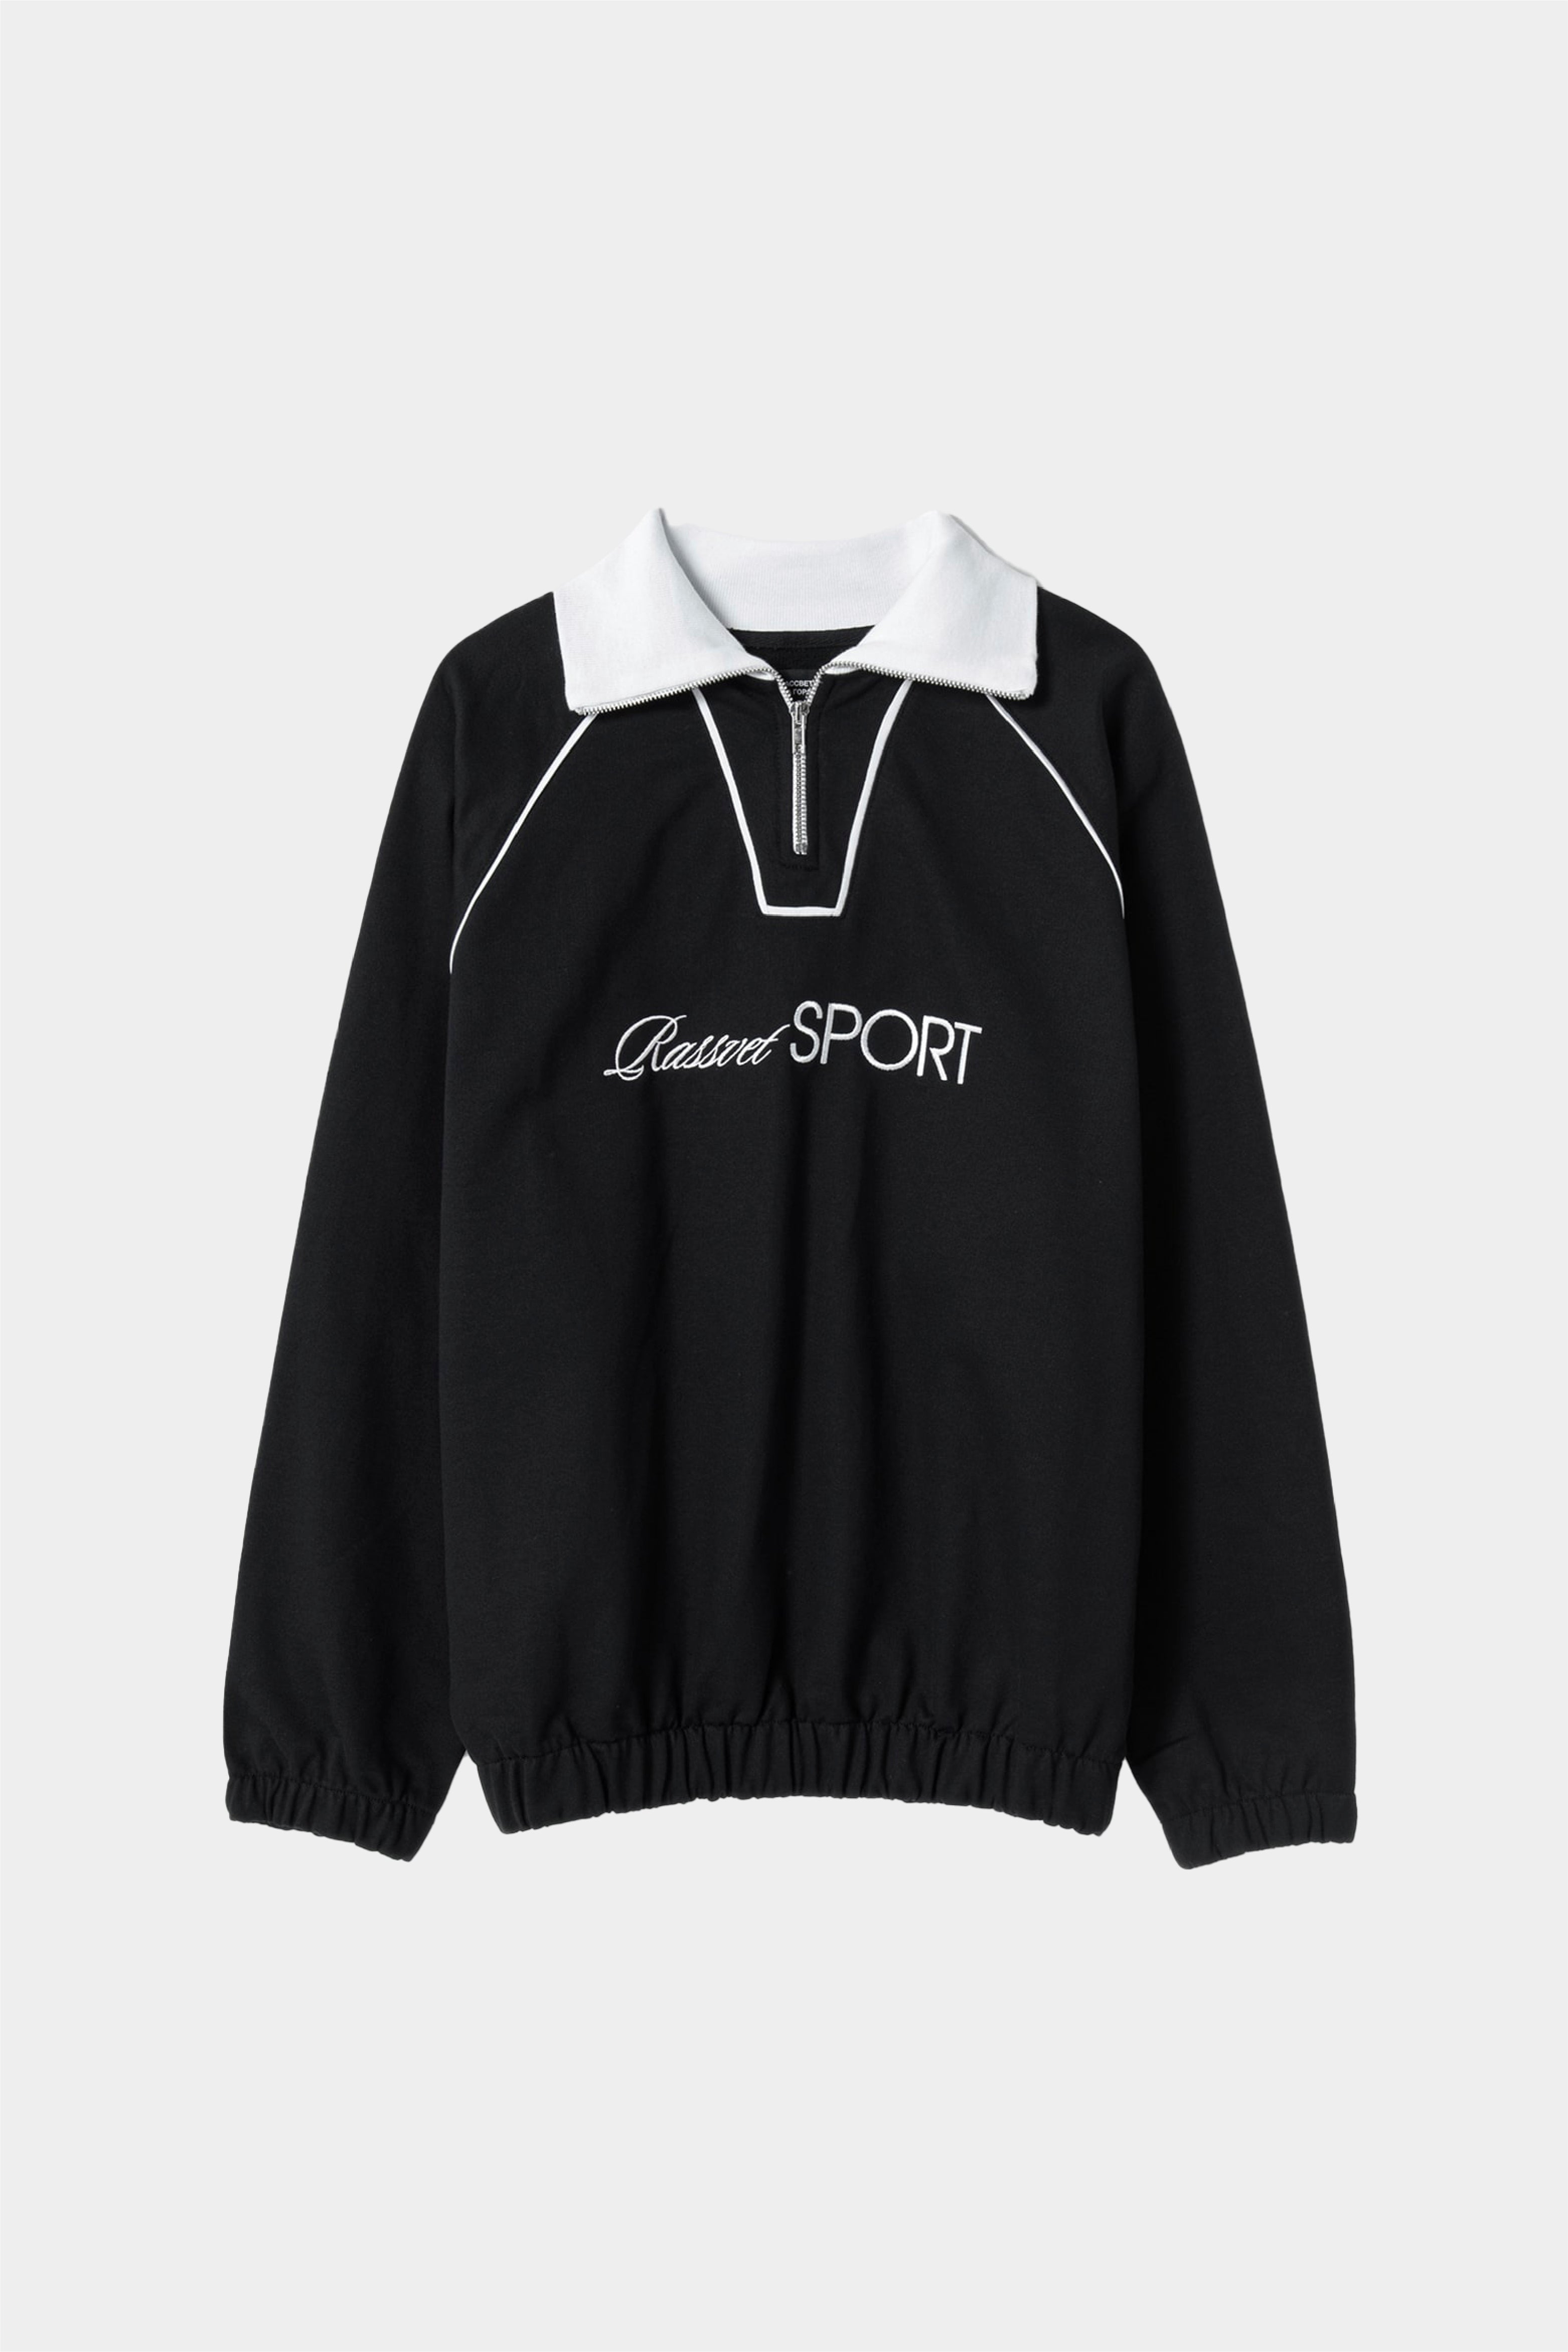 Selectshop FRAME - RASSVET Sport Collared Sweatshirt Sweats-knits Dubai